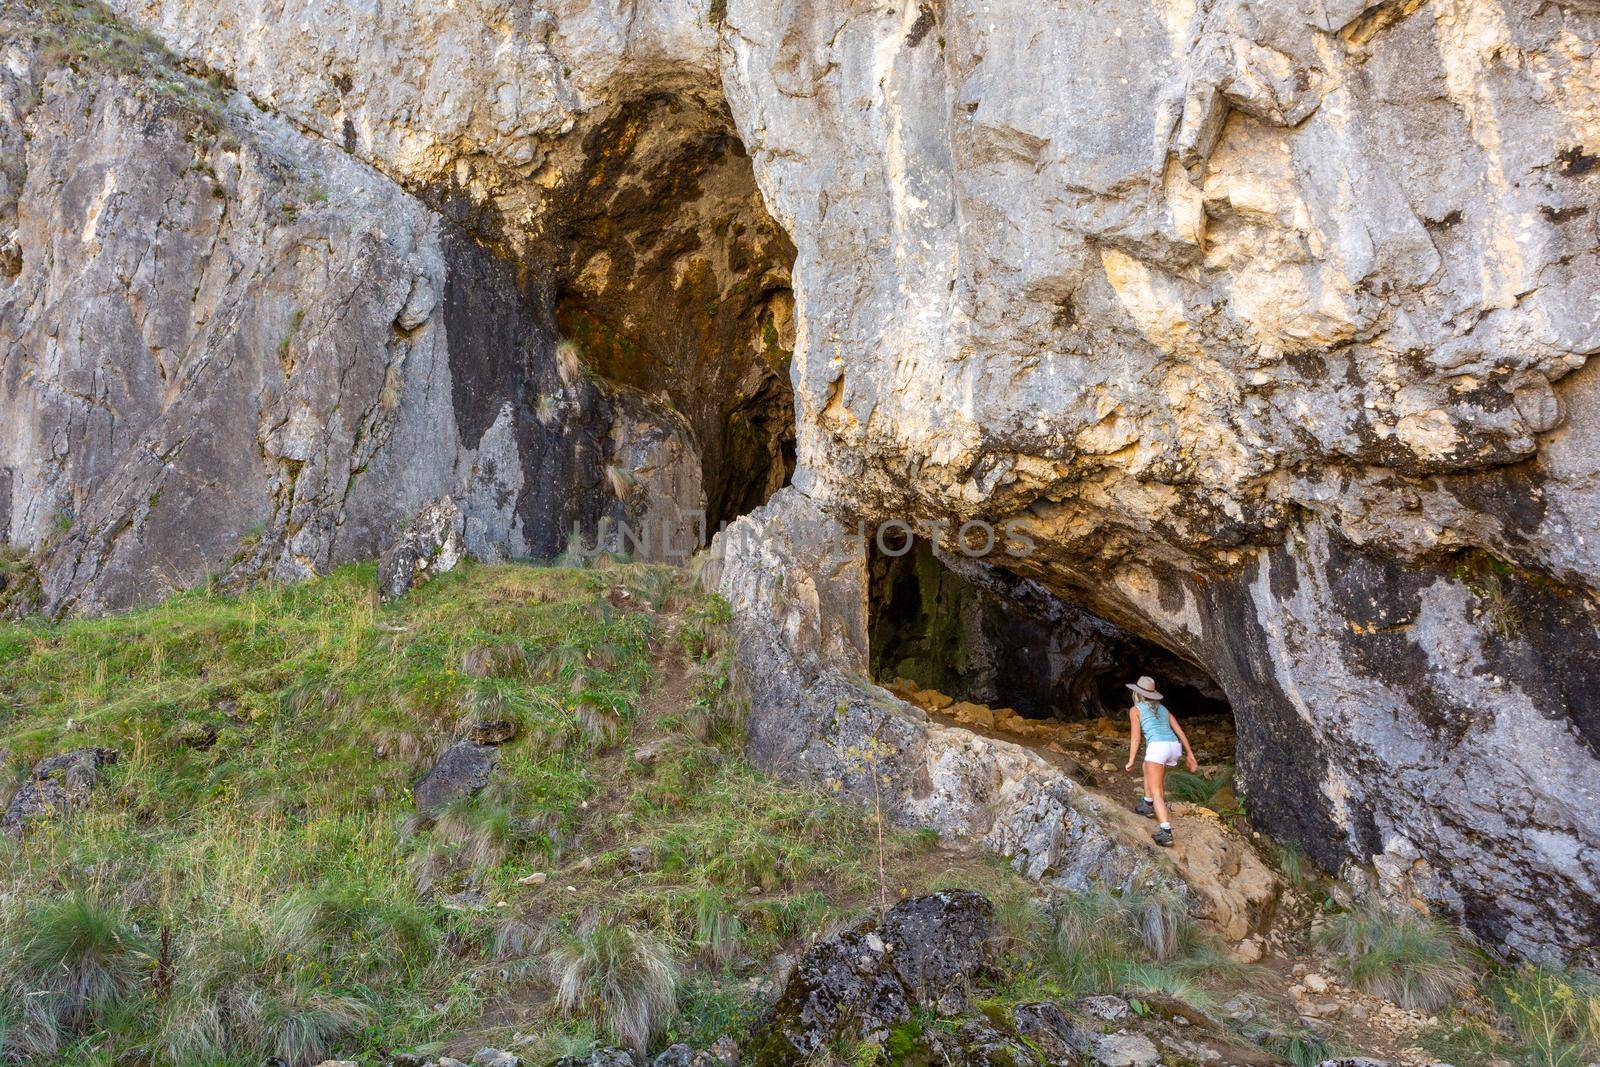 Female explorer entering a cave system in mountainous terrain in Australia